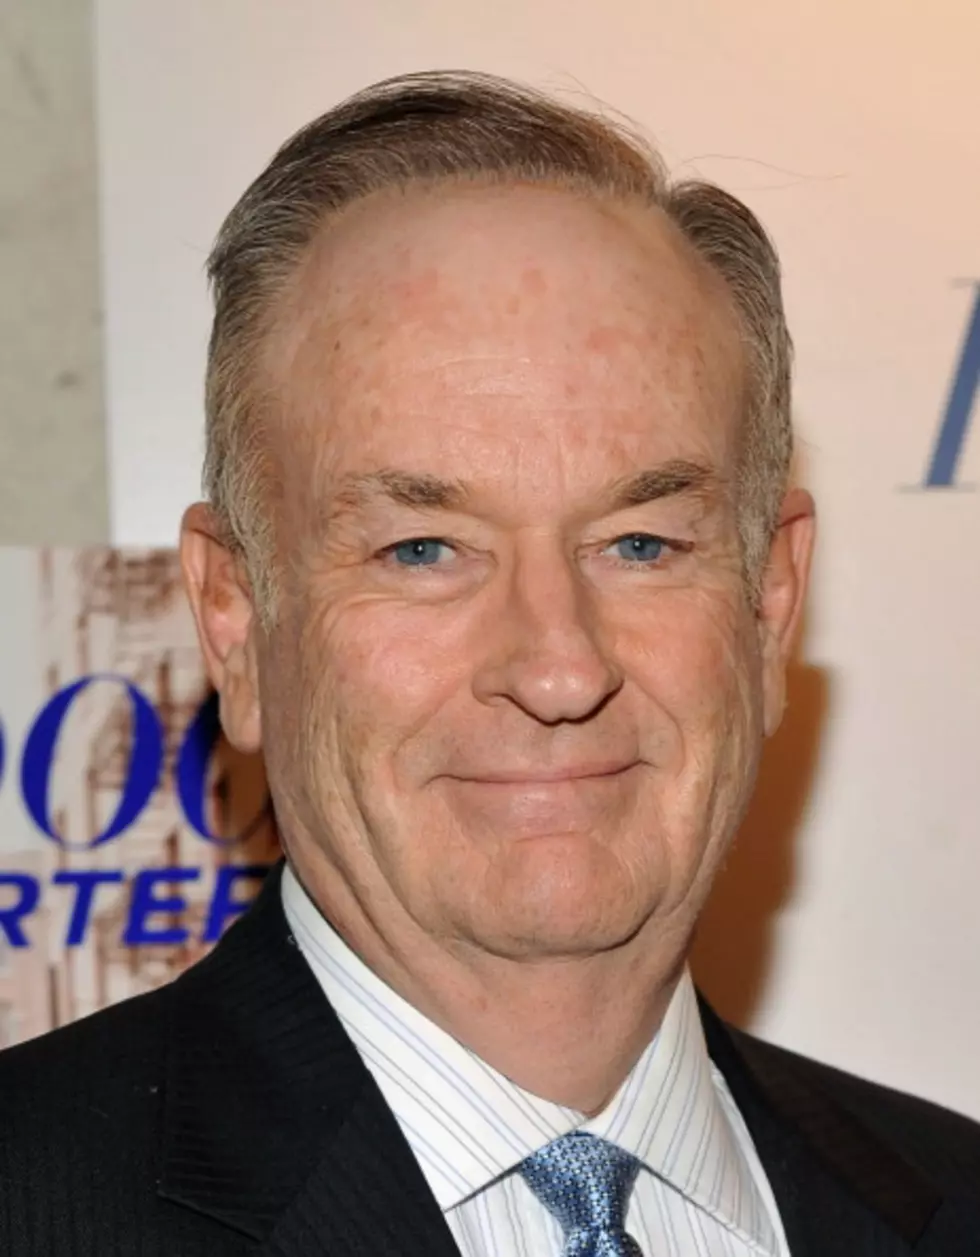 Glenn Beck Joins Bill O’Reilly On Fox News Program [VIDEO]